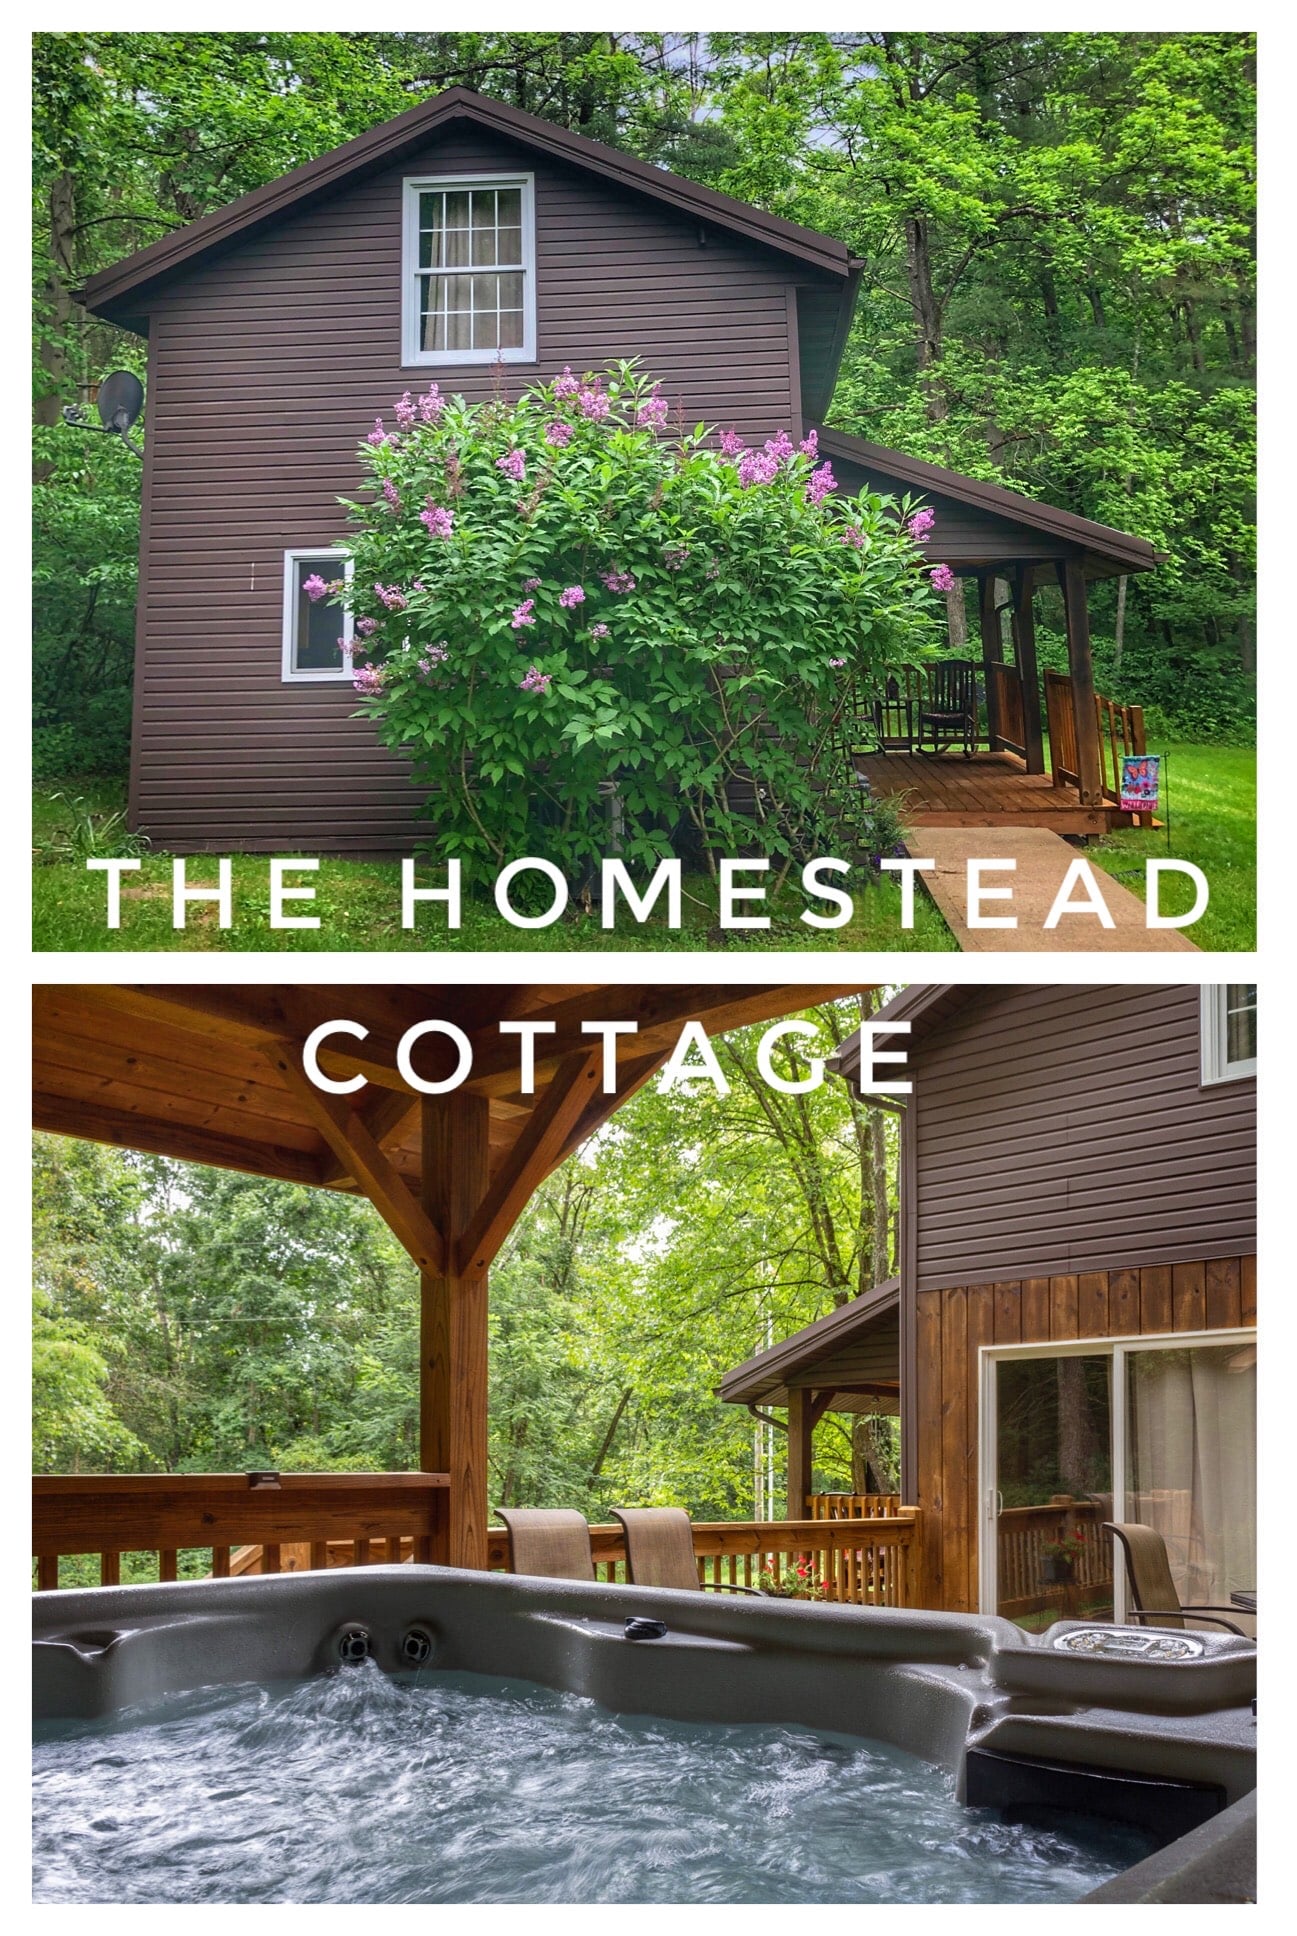 The homestead cottage hottub